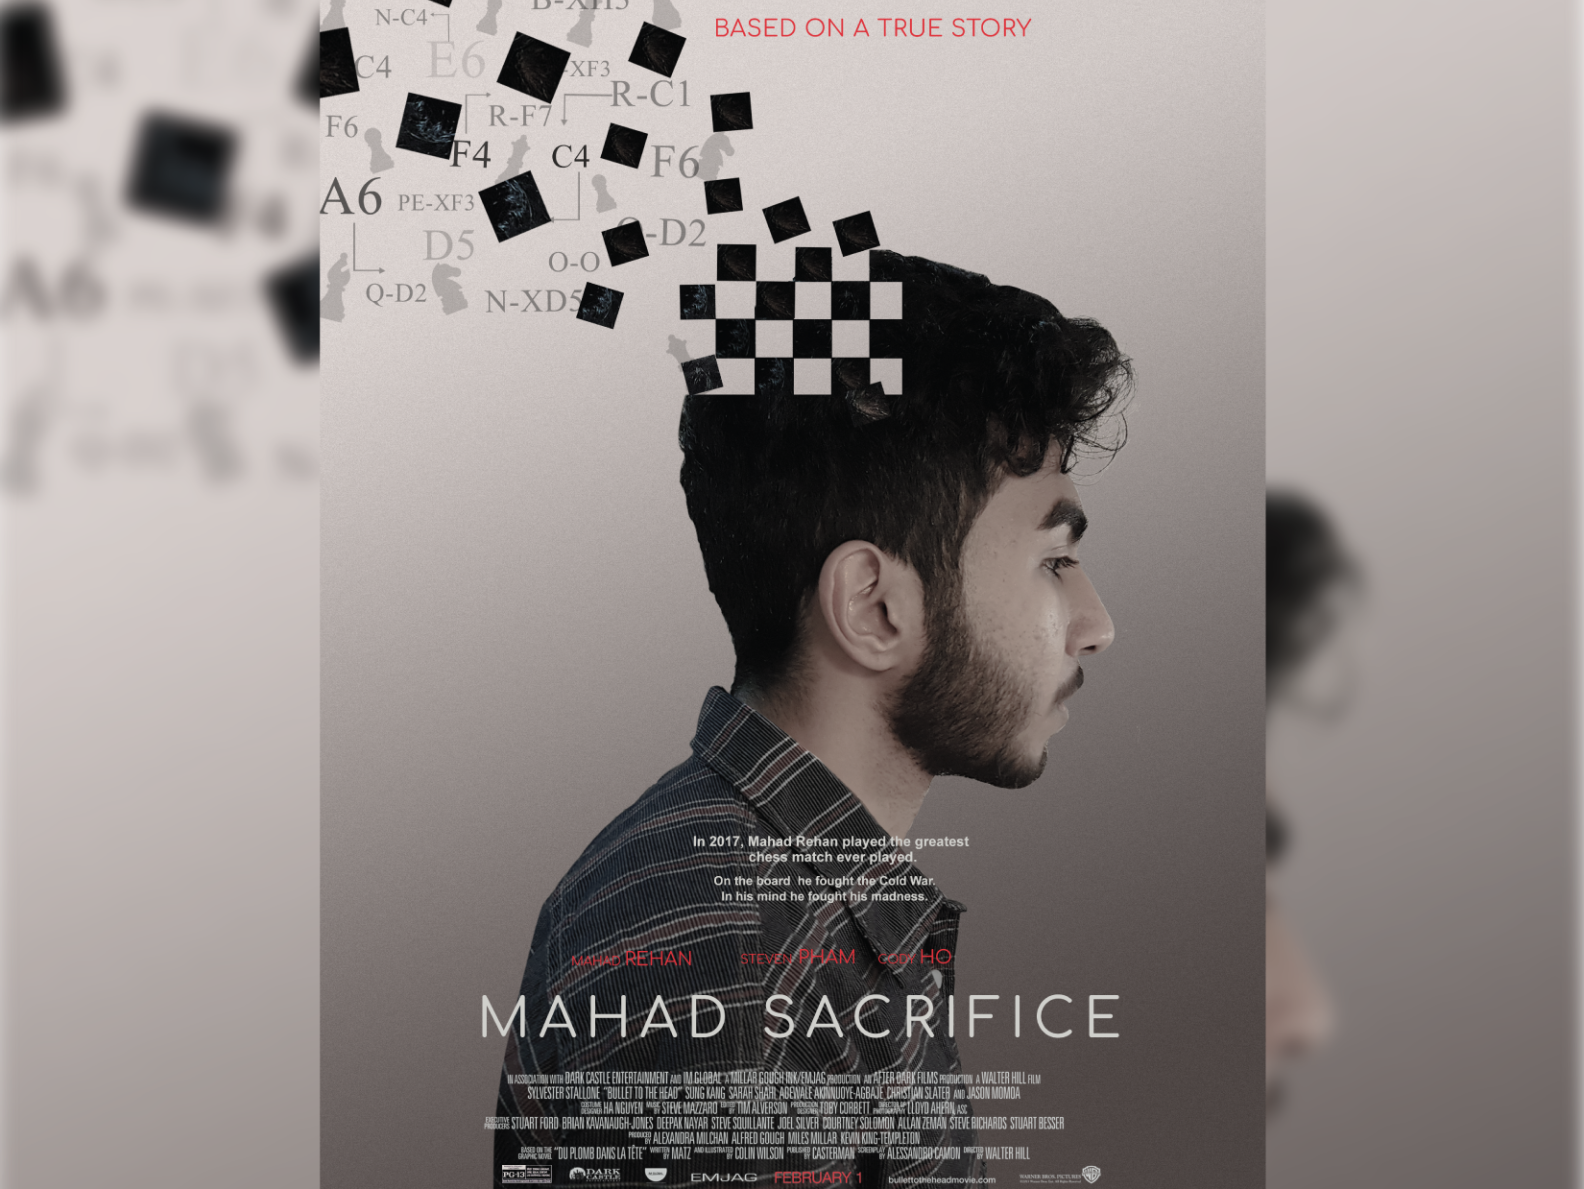 pawn sacrifice parody poster by Mahad Rehan on Dribbble